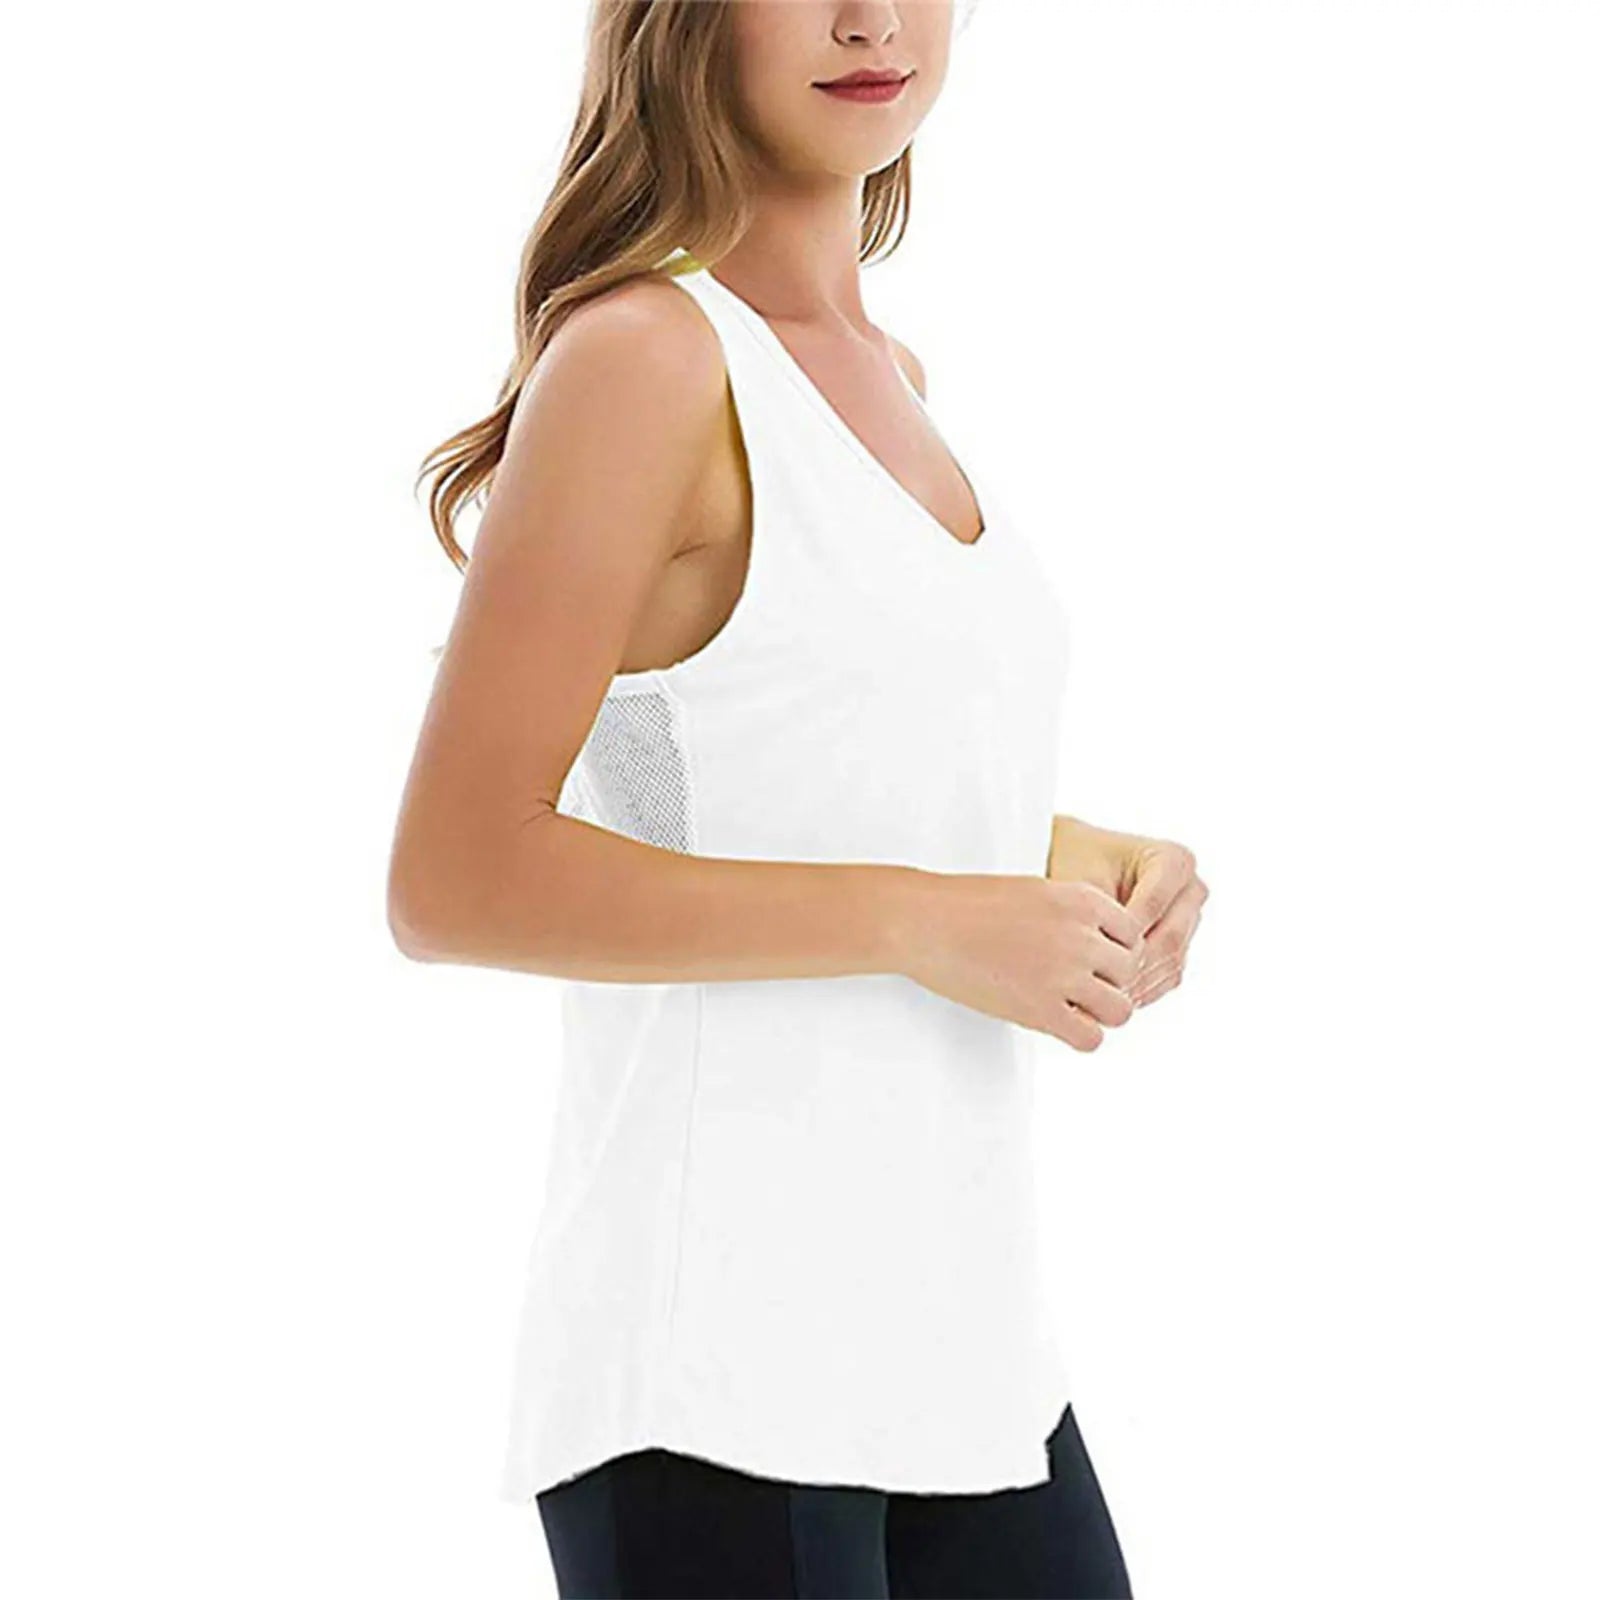 Women Sleeveless Racerback Yoga Vest Sport Singlet Female Athletic Fitness Sport Tank Tops Gym Running Training Yoga Shirts